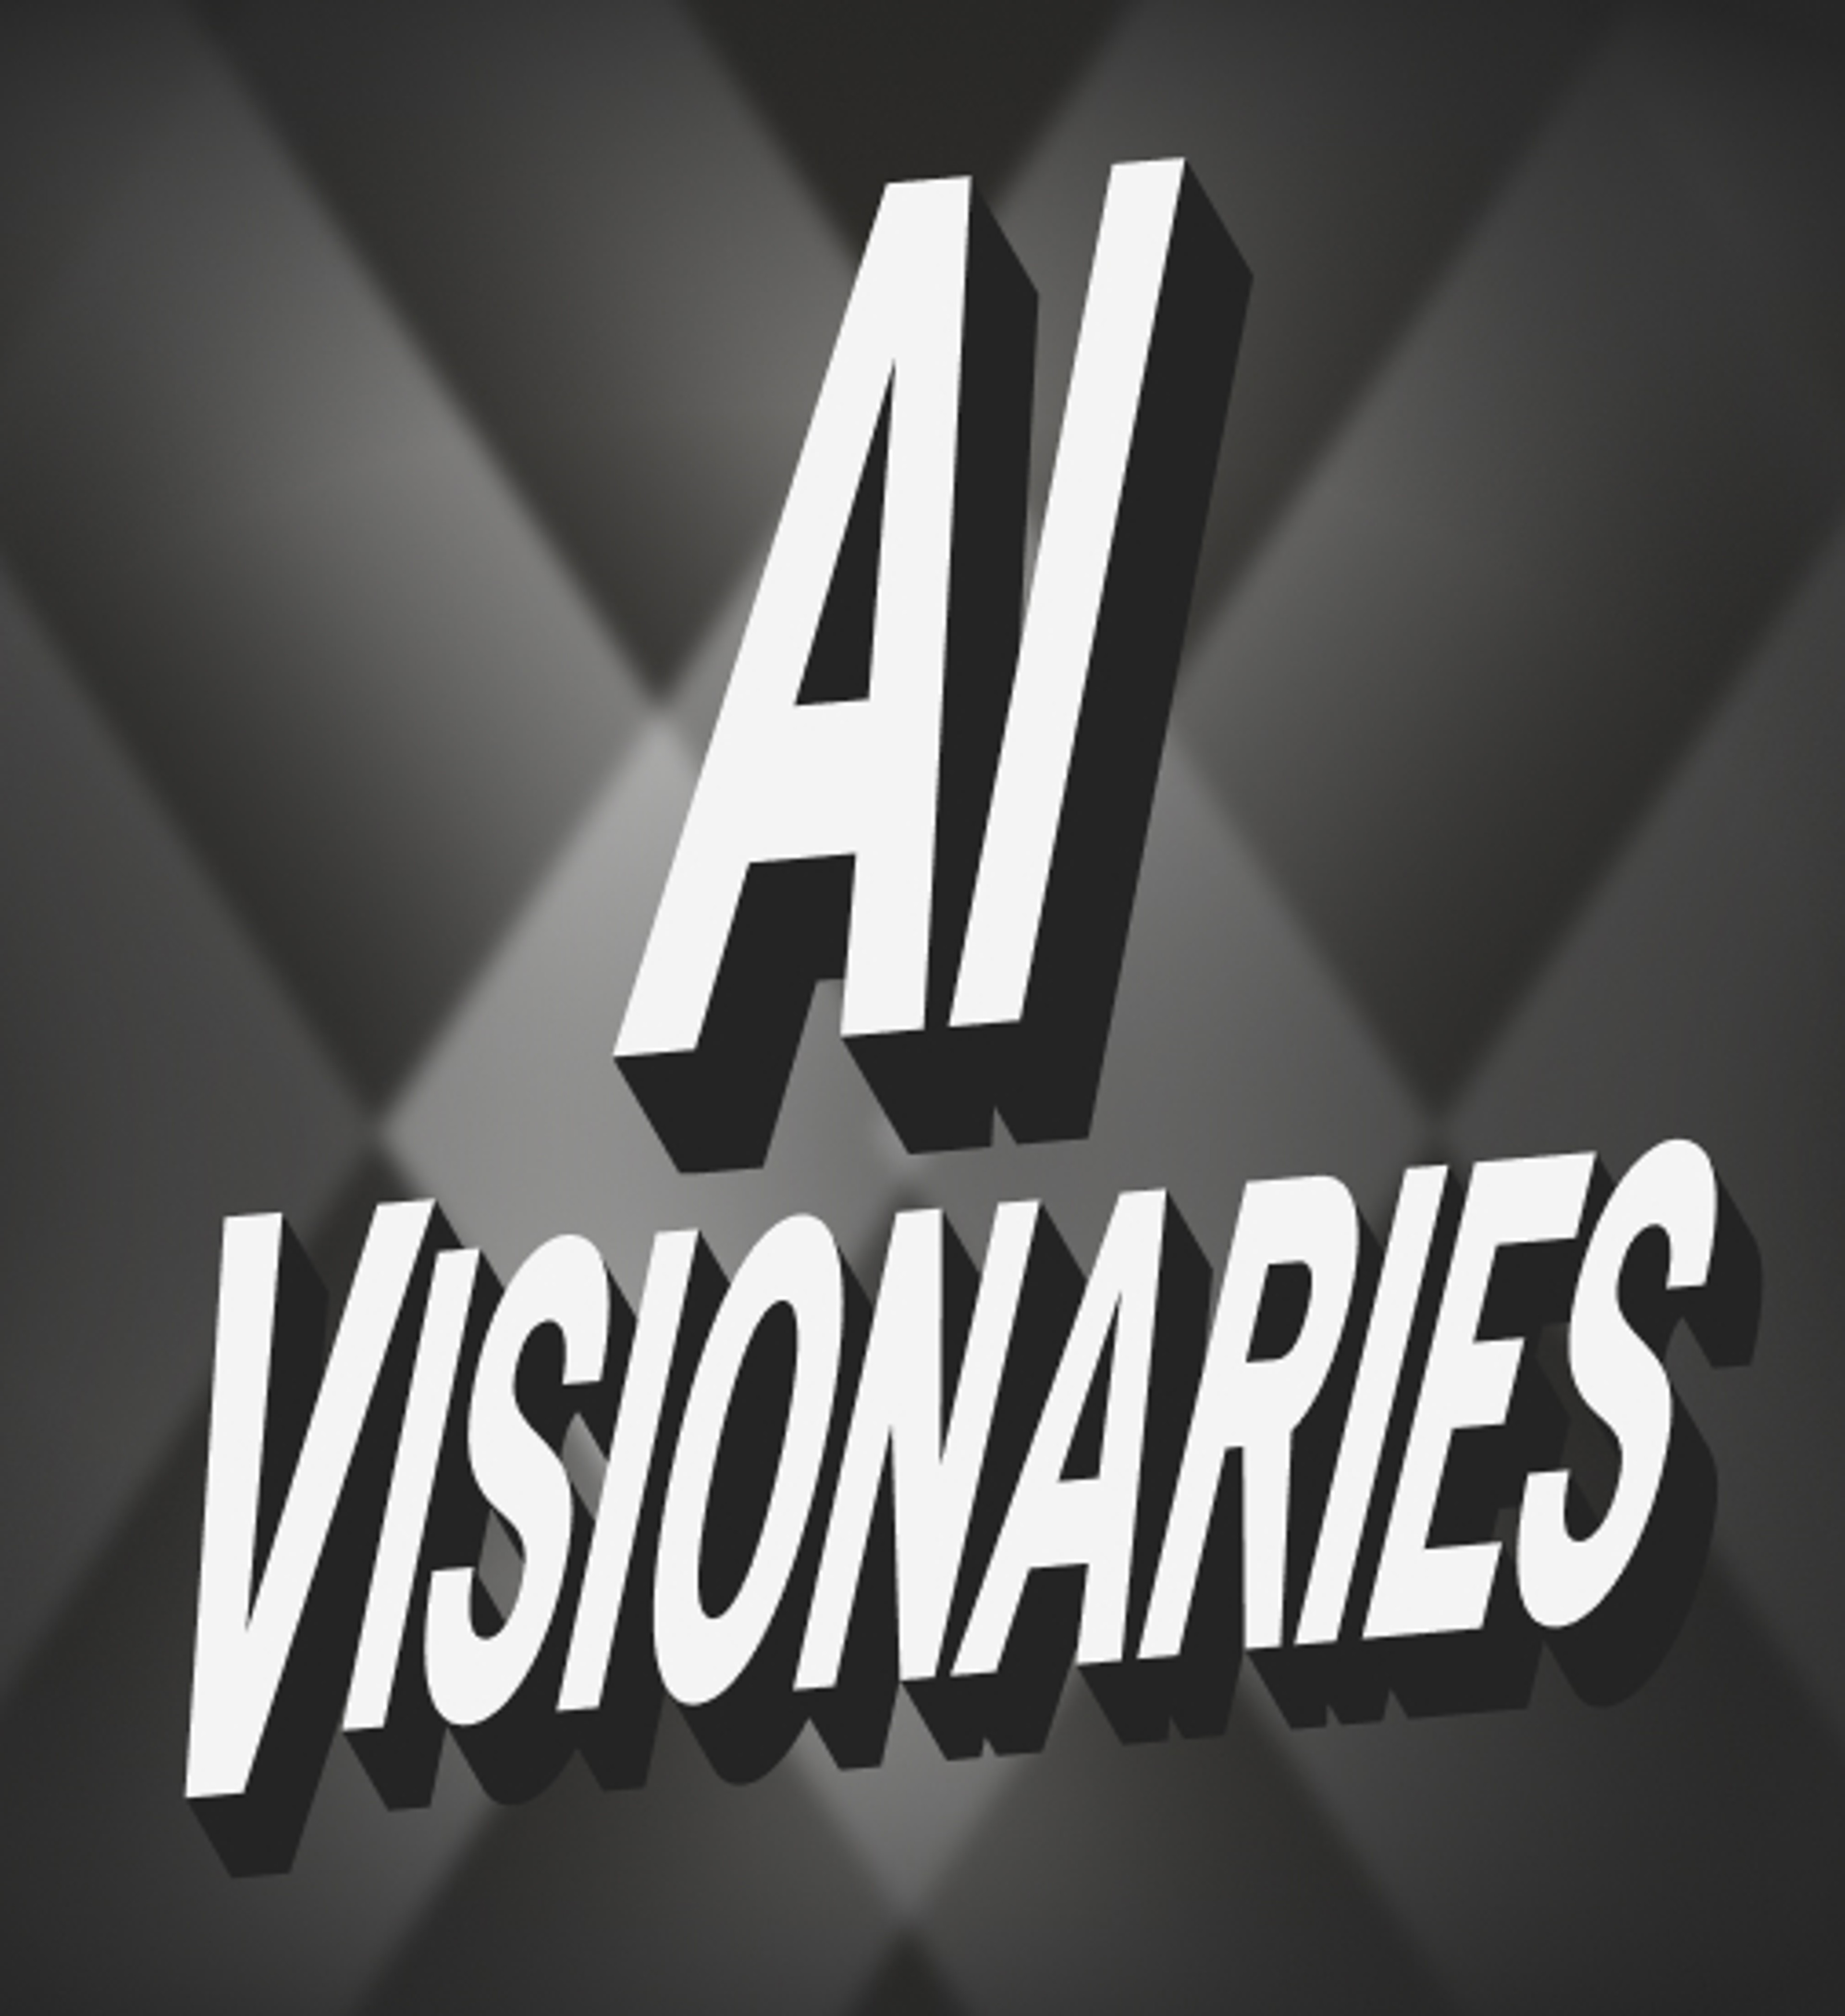 AI Visionaries background image